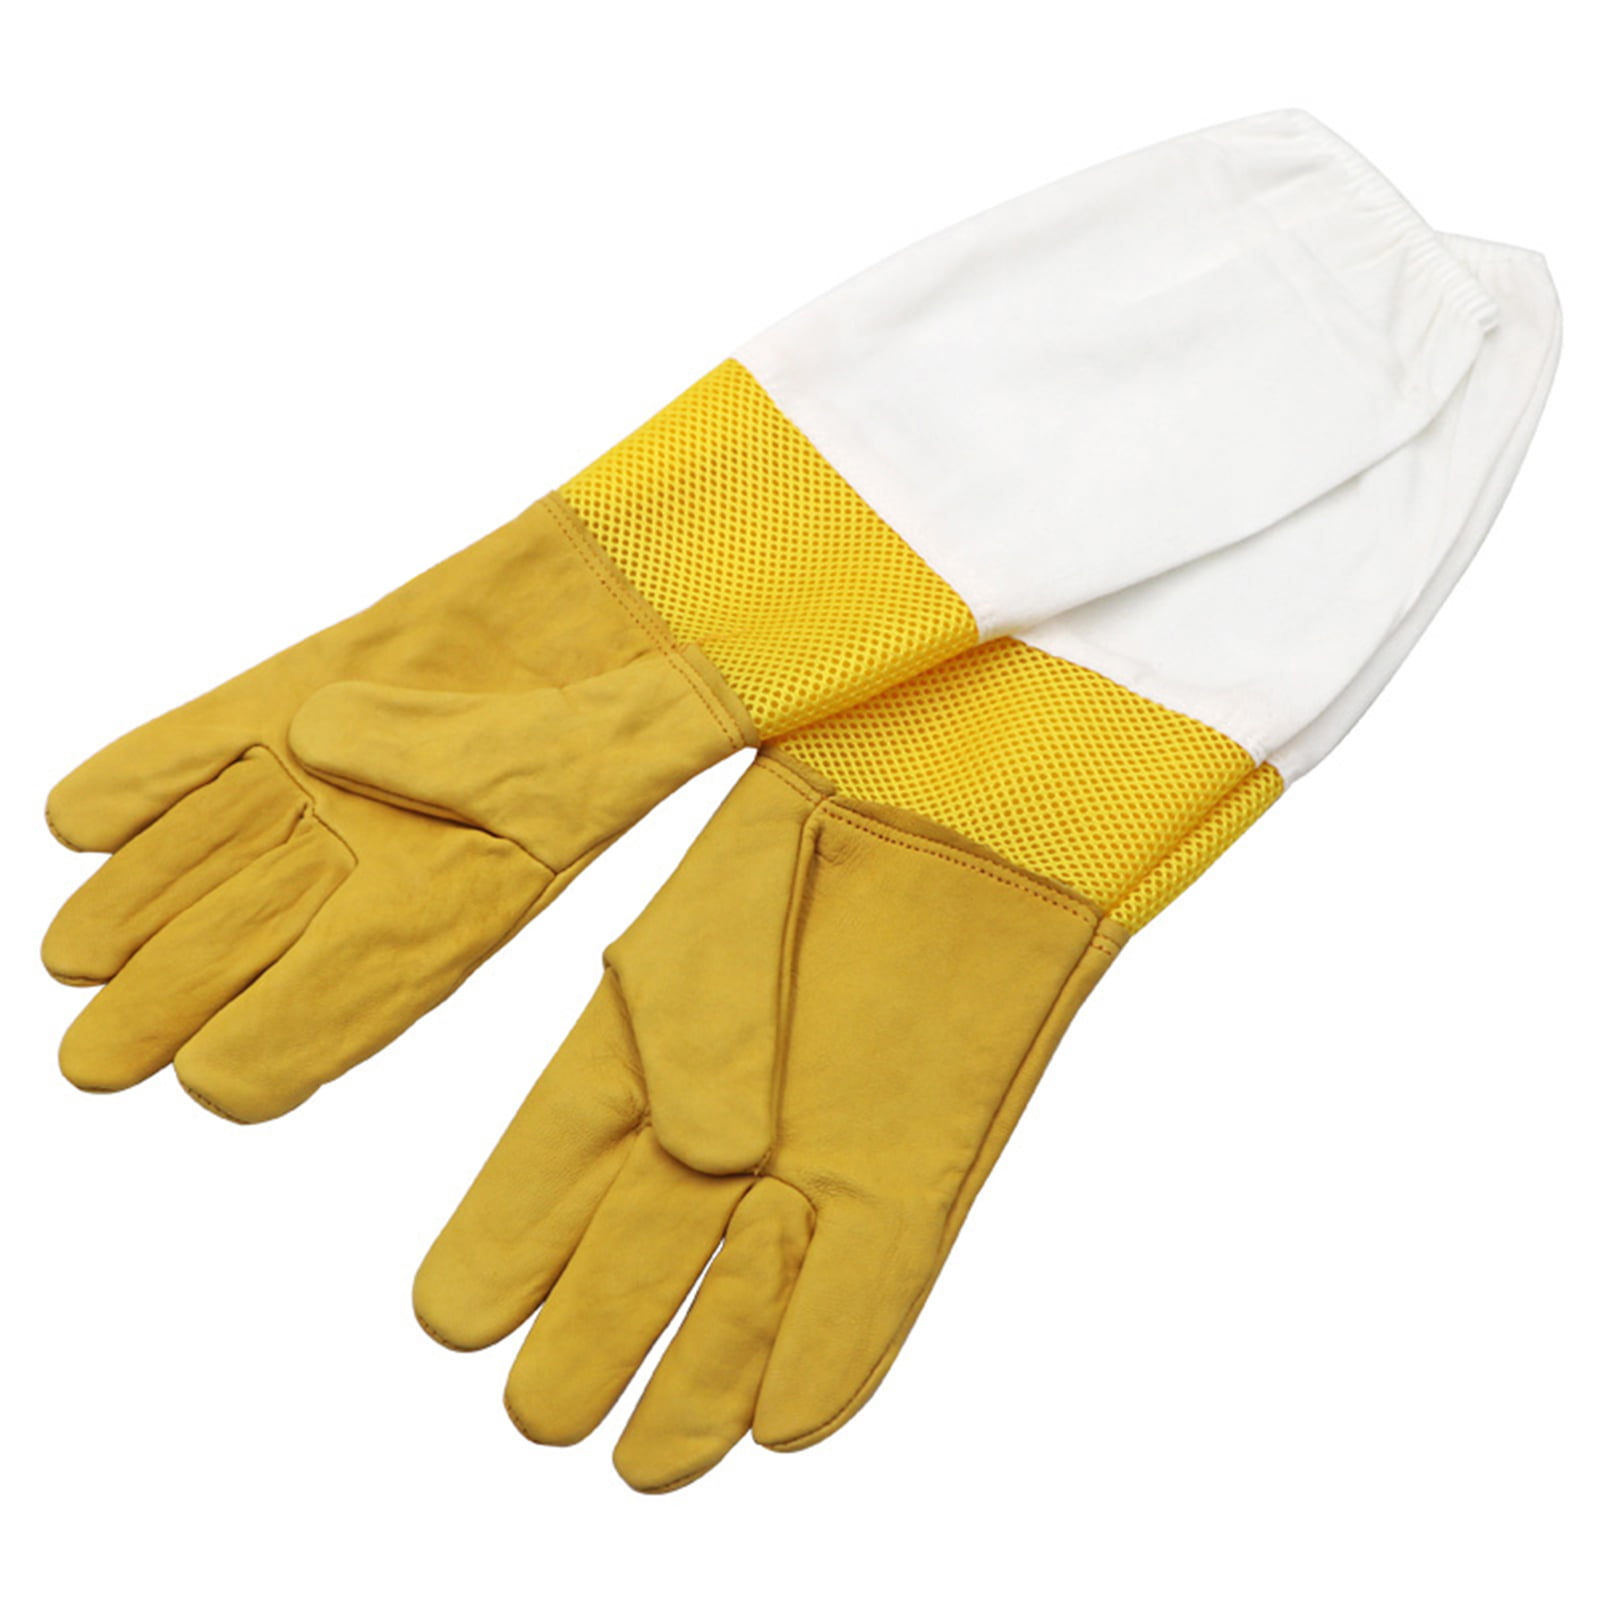 1Pair Beekeeping Protective Gloves Bee Keeping Vented Long Sleeves XL Outdoor US 